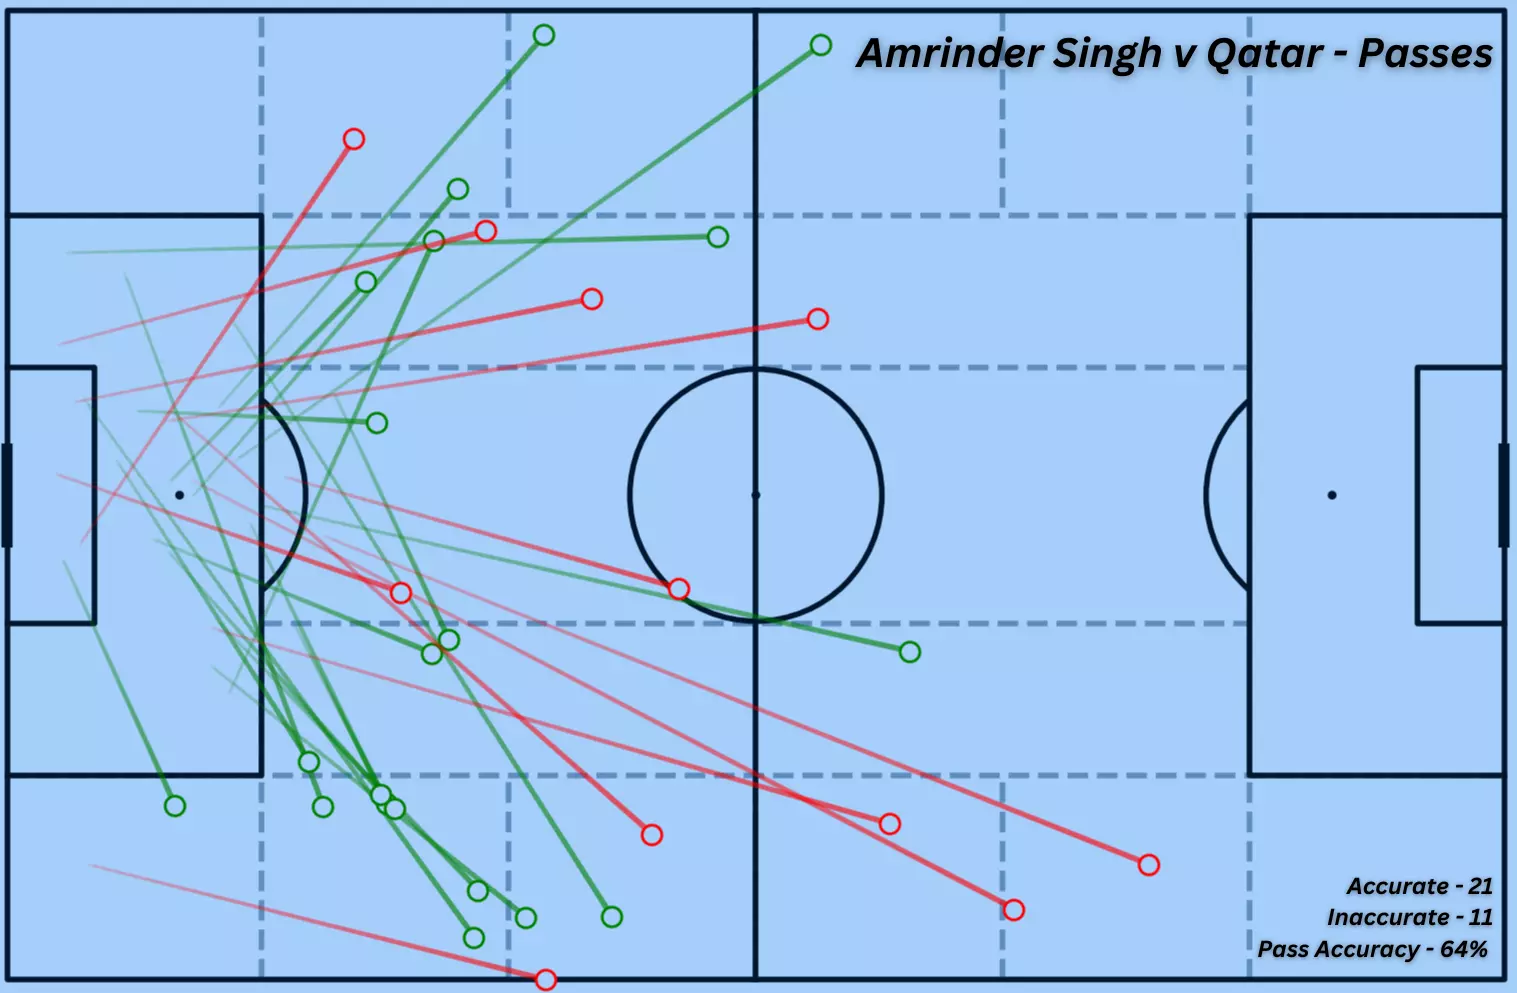 Amrinder Singhs open-play passes v Qatar 